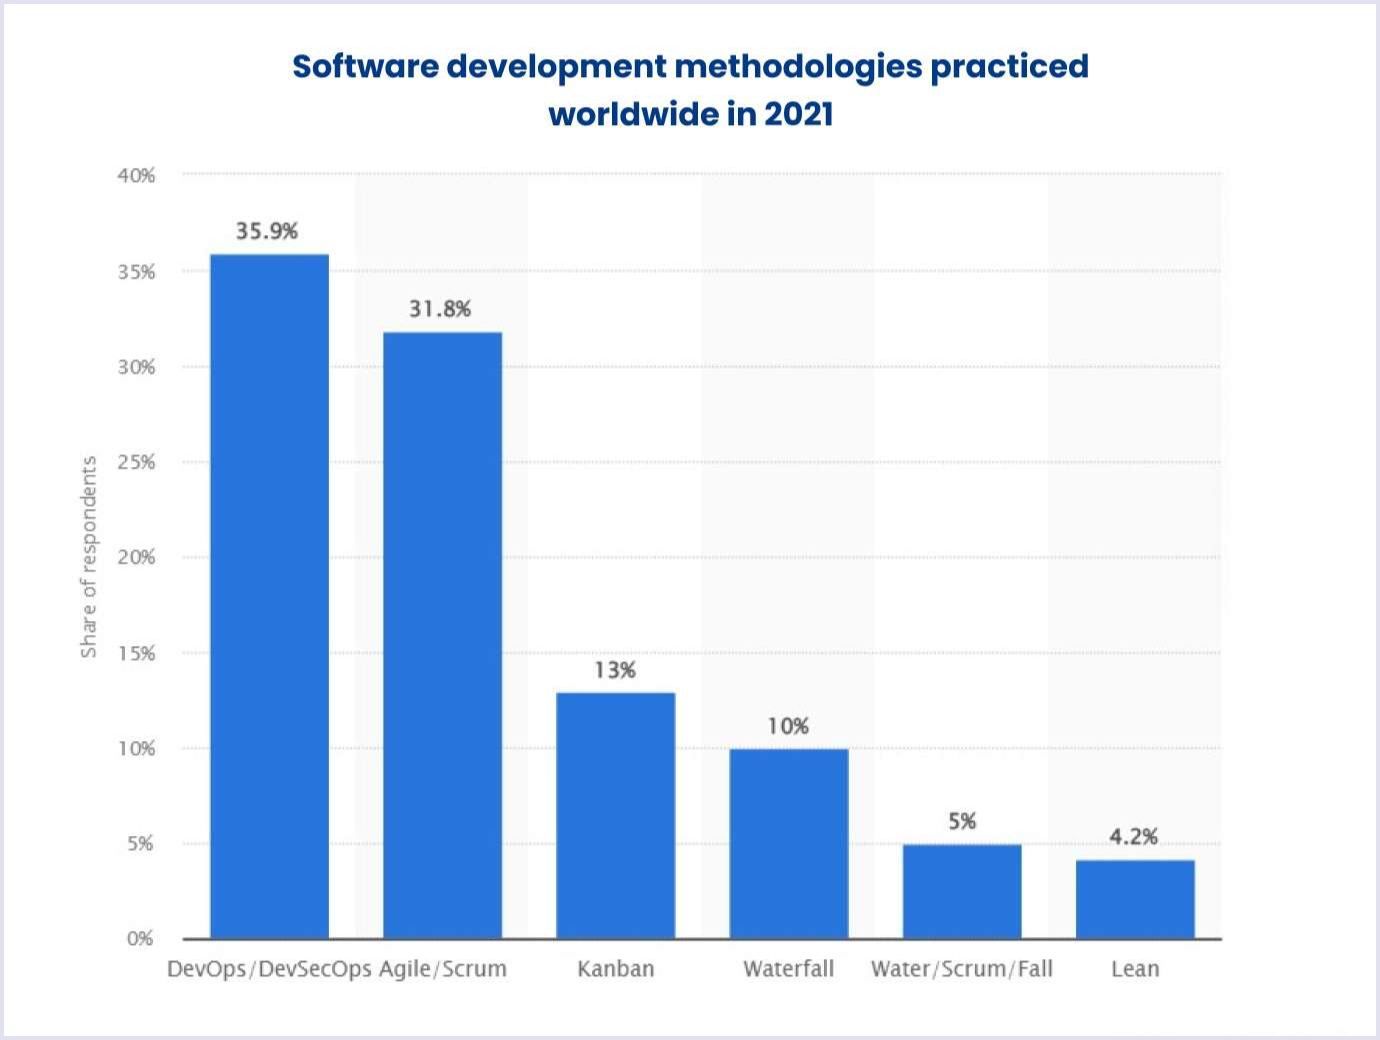 Software development methodologies worldwide